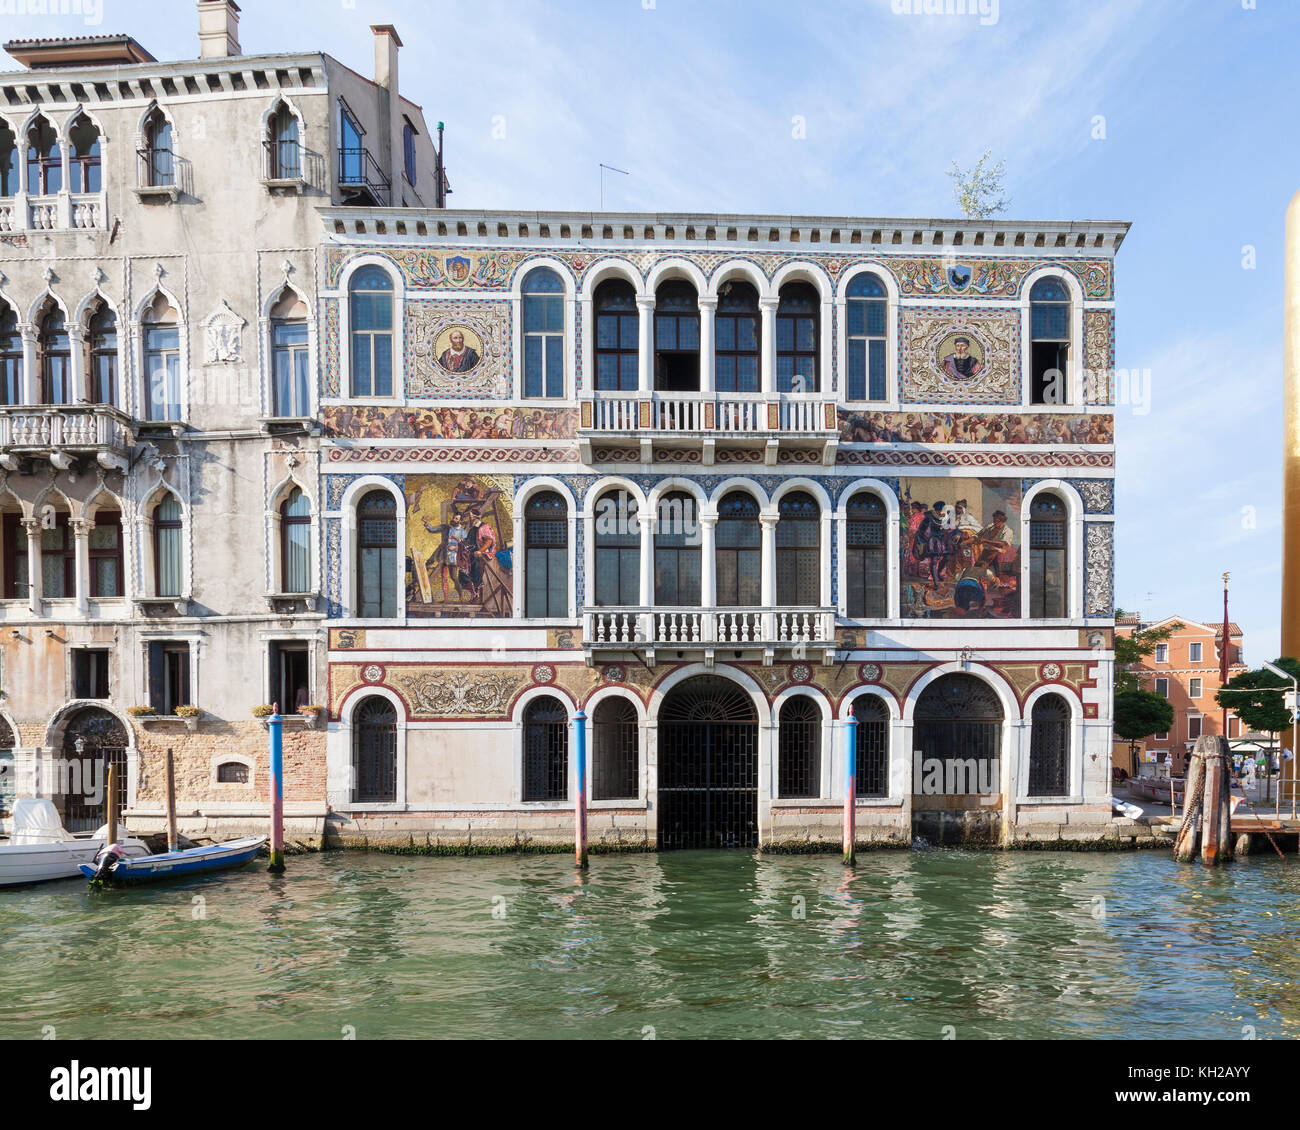 The ornate facade of Palazzo Barbarigo with its murano glass mosaics,  Grand Canal, Dorsoduro, Venice, Italy Stock Photo